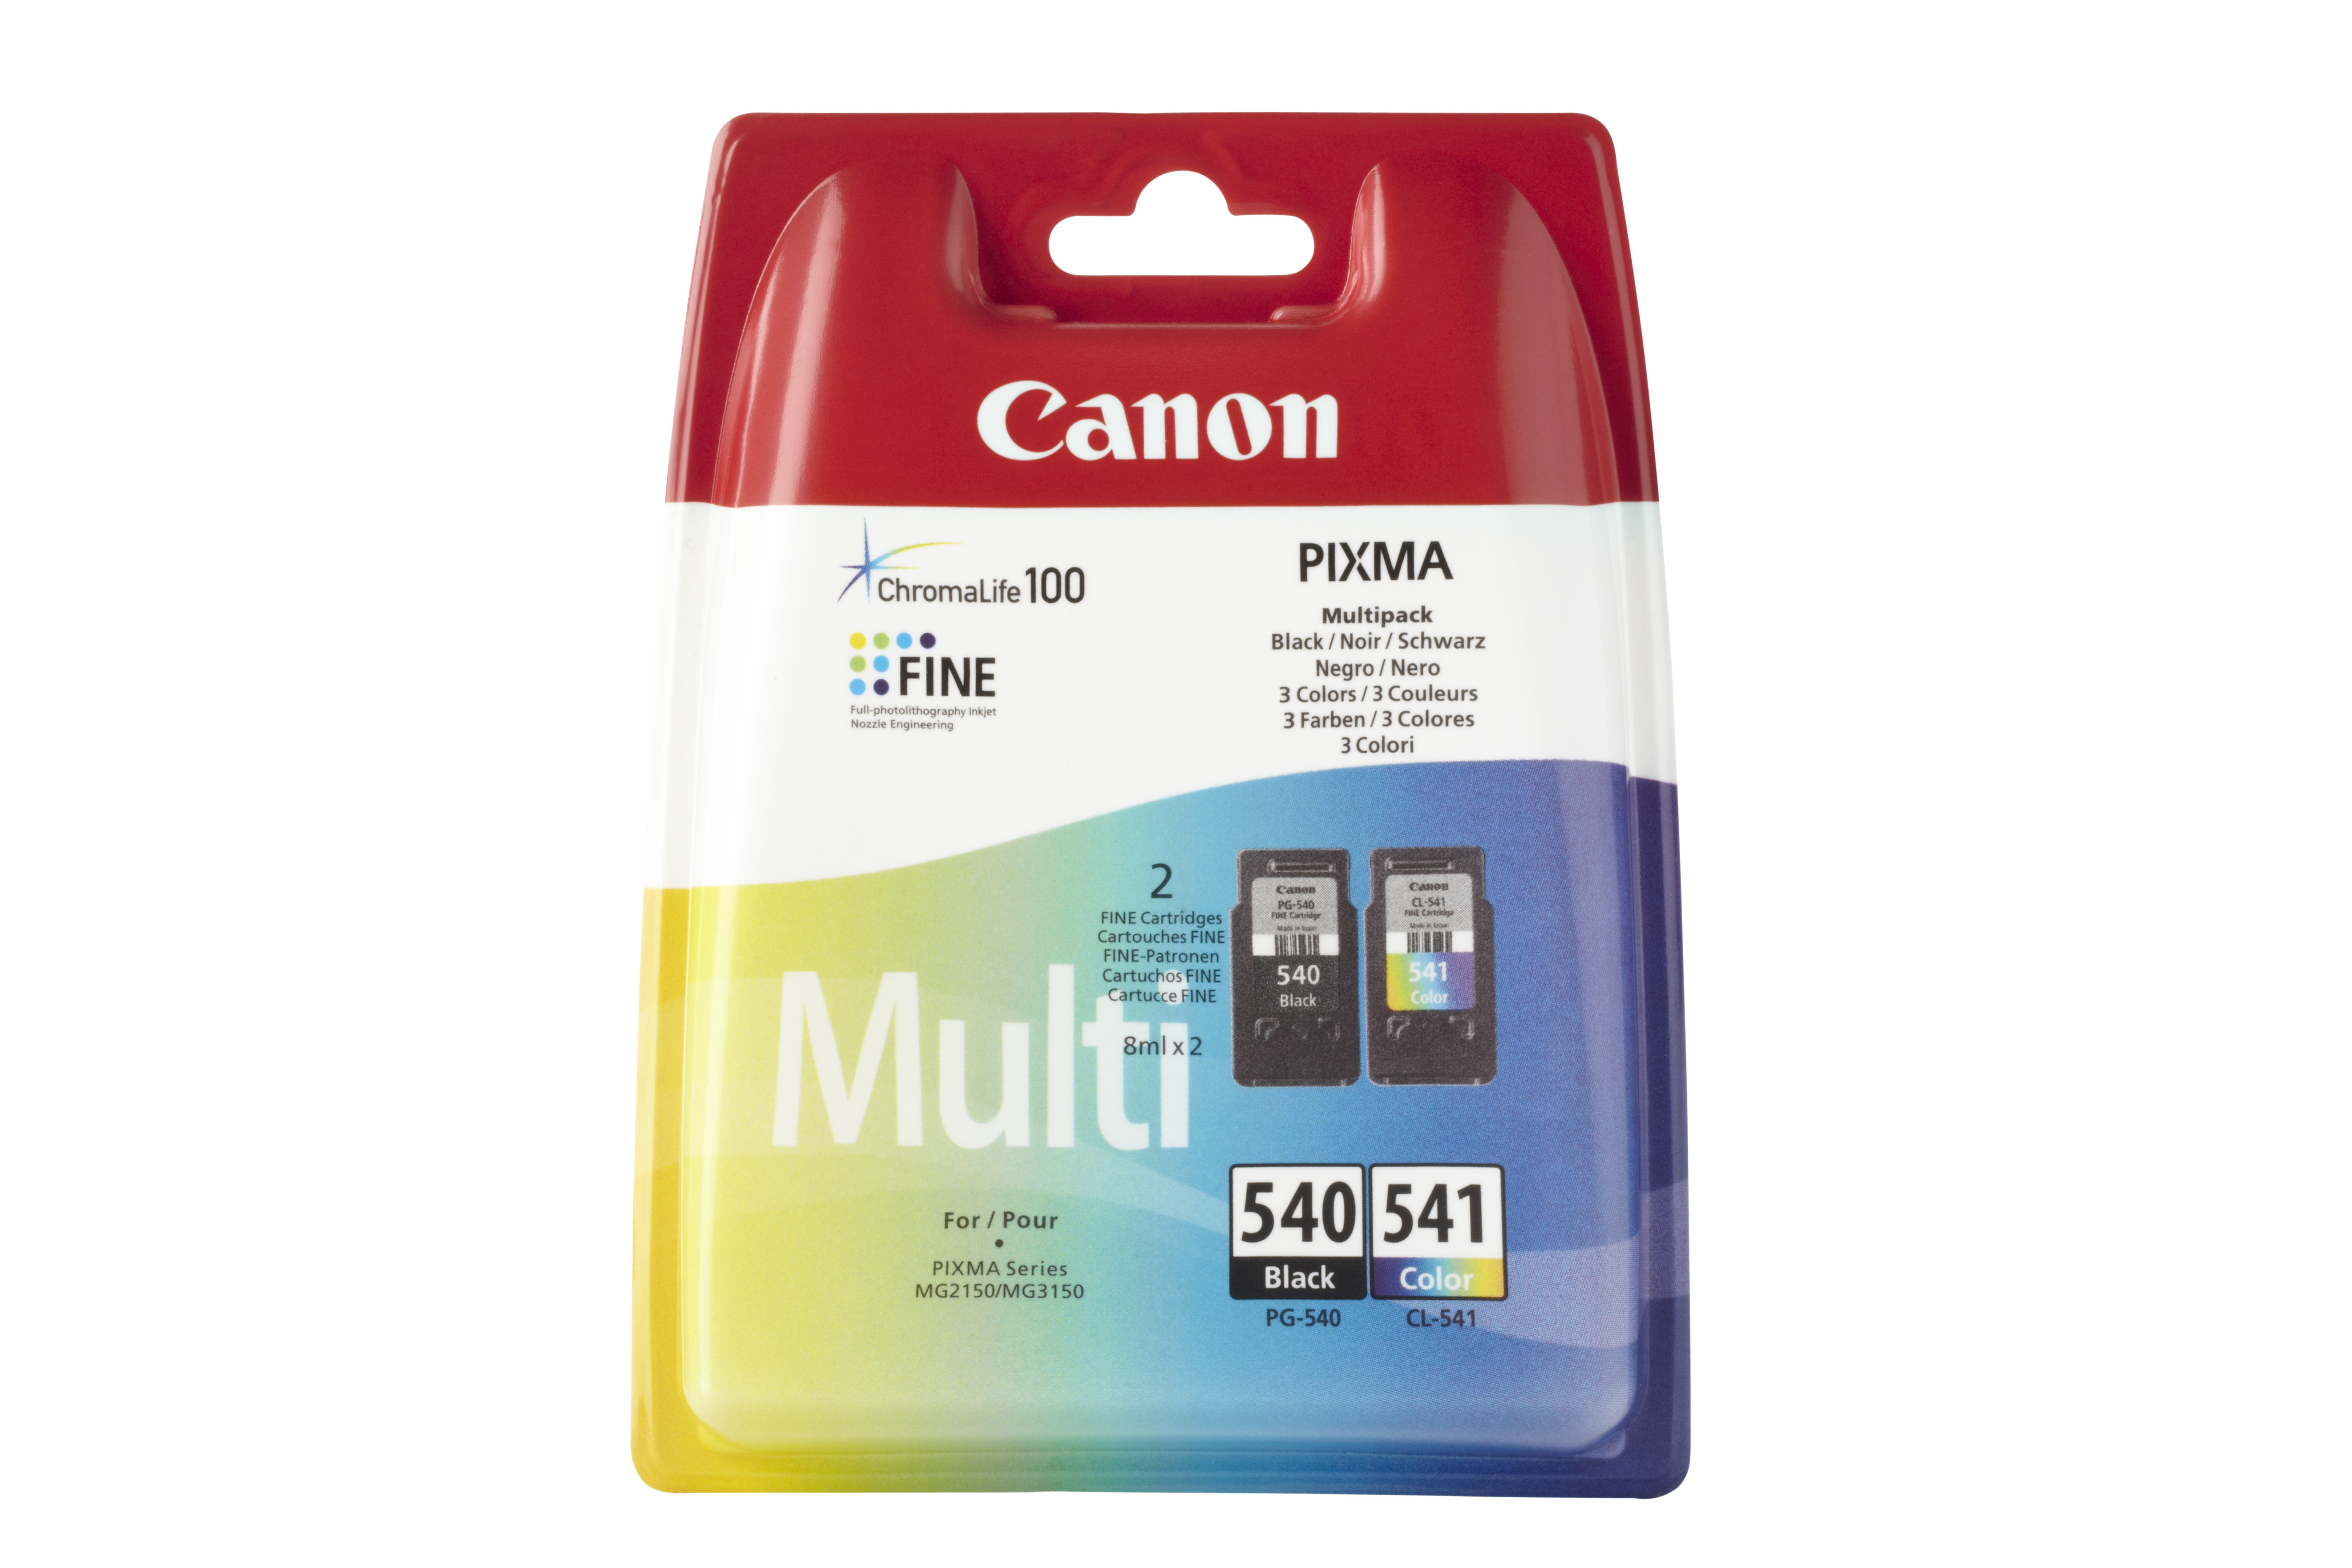 Canon PG-575 & CL-576 Tintenpatrone (Set, inkl. Fotoglanzpapier 10x15 cm)